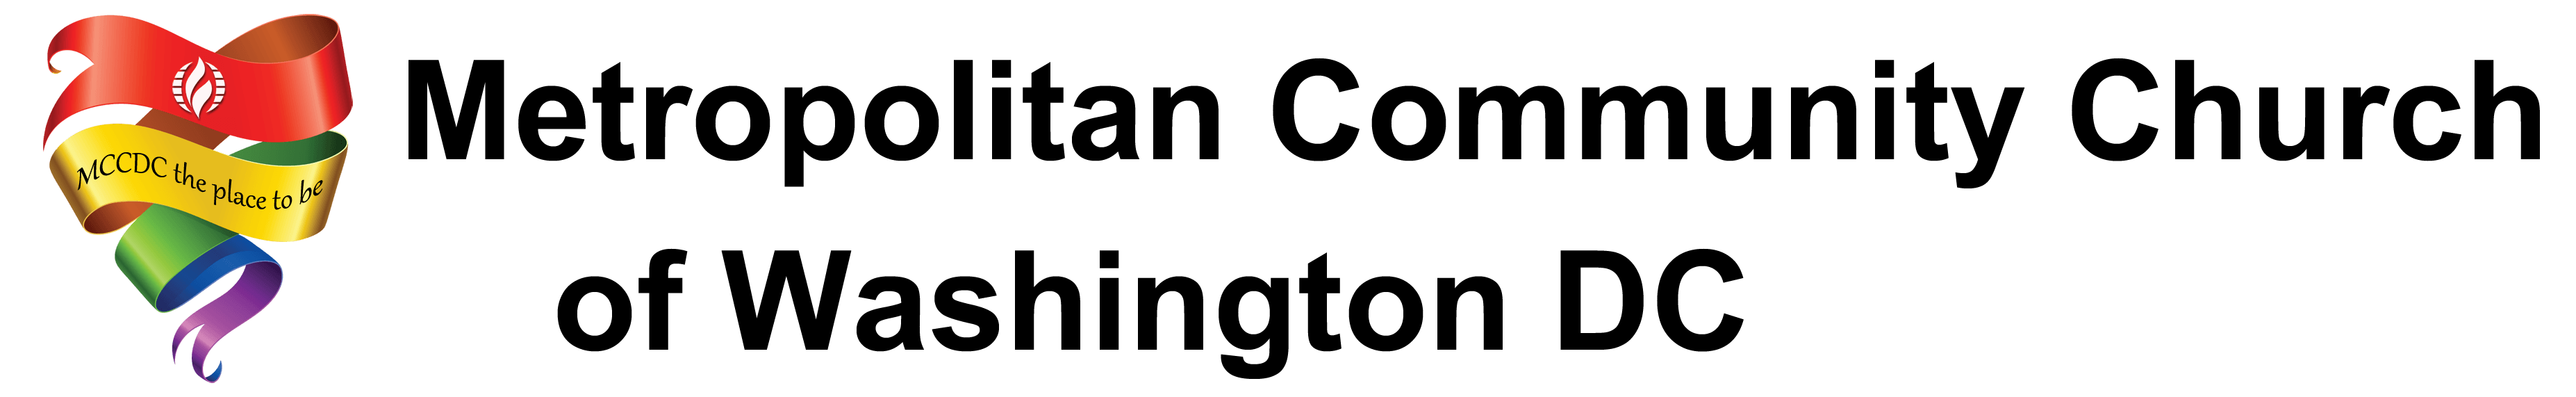 Washington DC Logo - Metropolitan Community Church of Washington DC